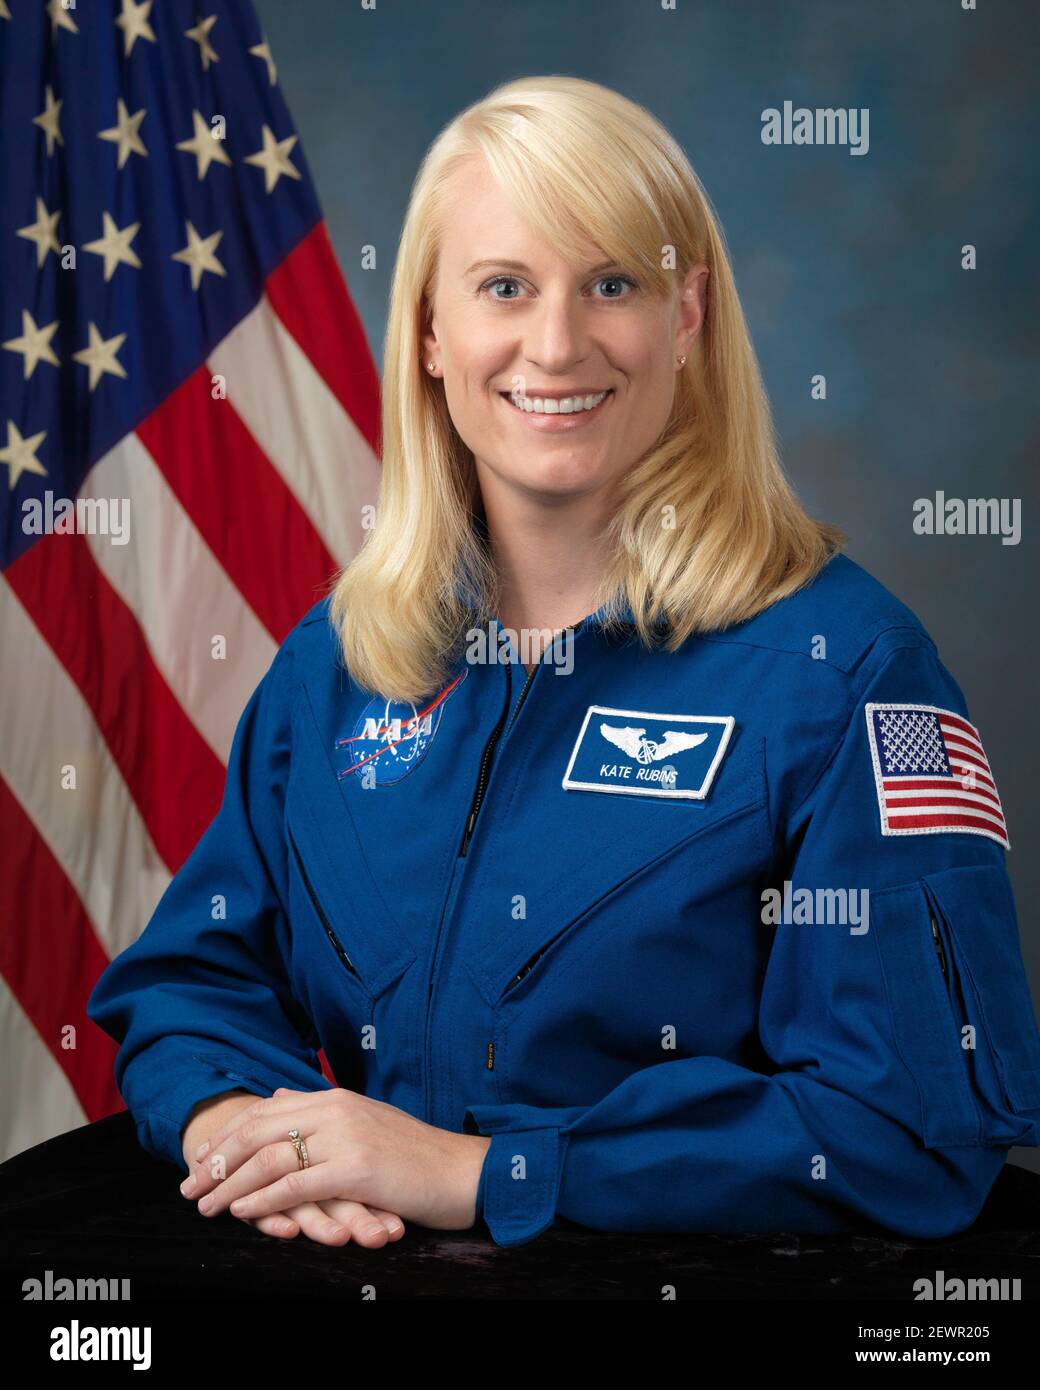 HOUSTON, TX, USA - 30 September 2009 - NASA astronaut Kate Rubins astronaut candidate portrait at NASA's Johnson Space Center in Houston - Photo: Geop Stock Photo